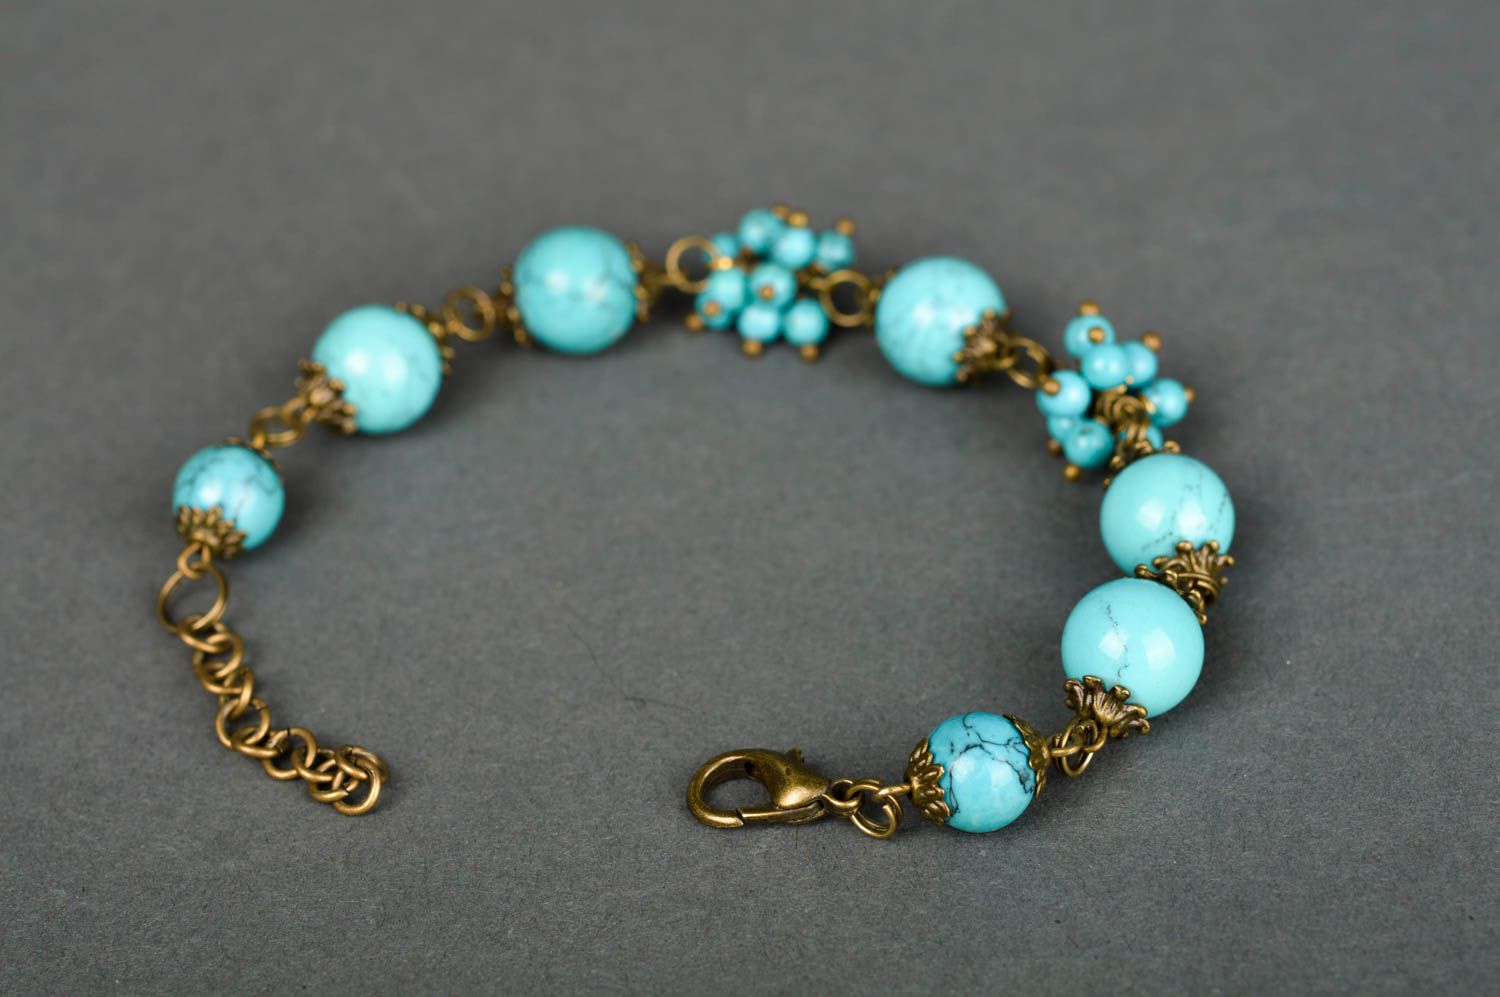 Handmade festive jewelry bracelet with natural stone evening jewelry gift photo 3